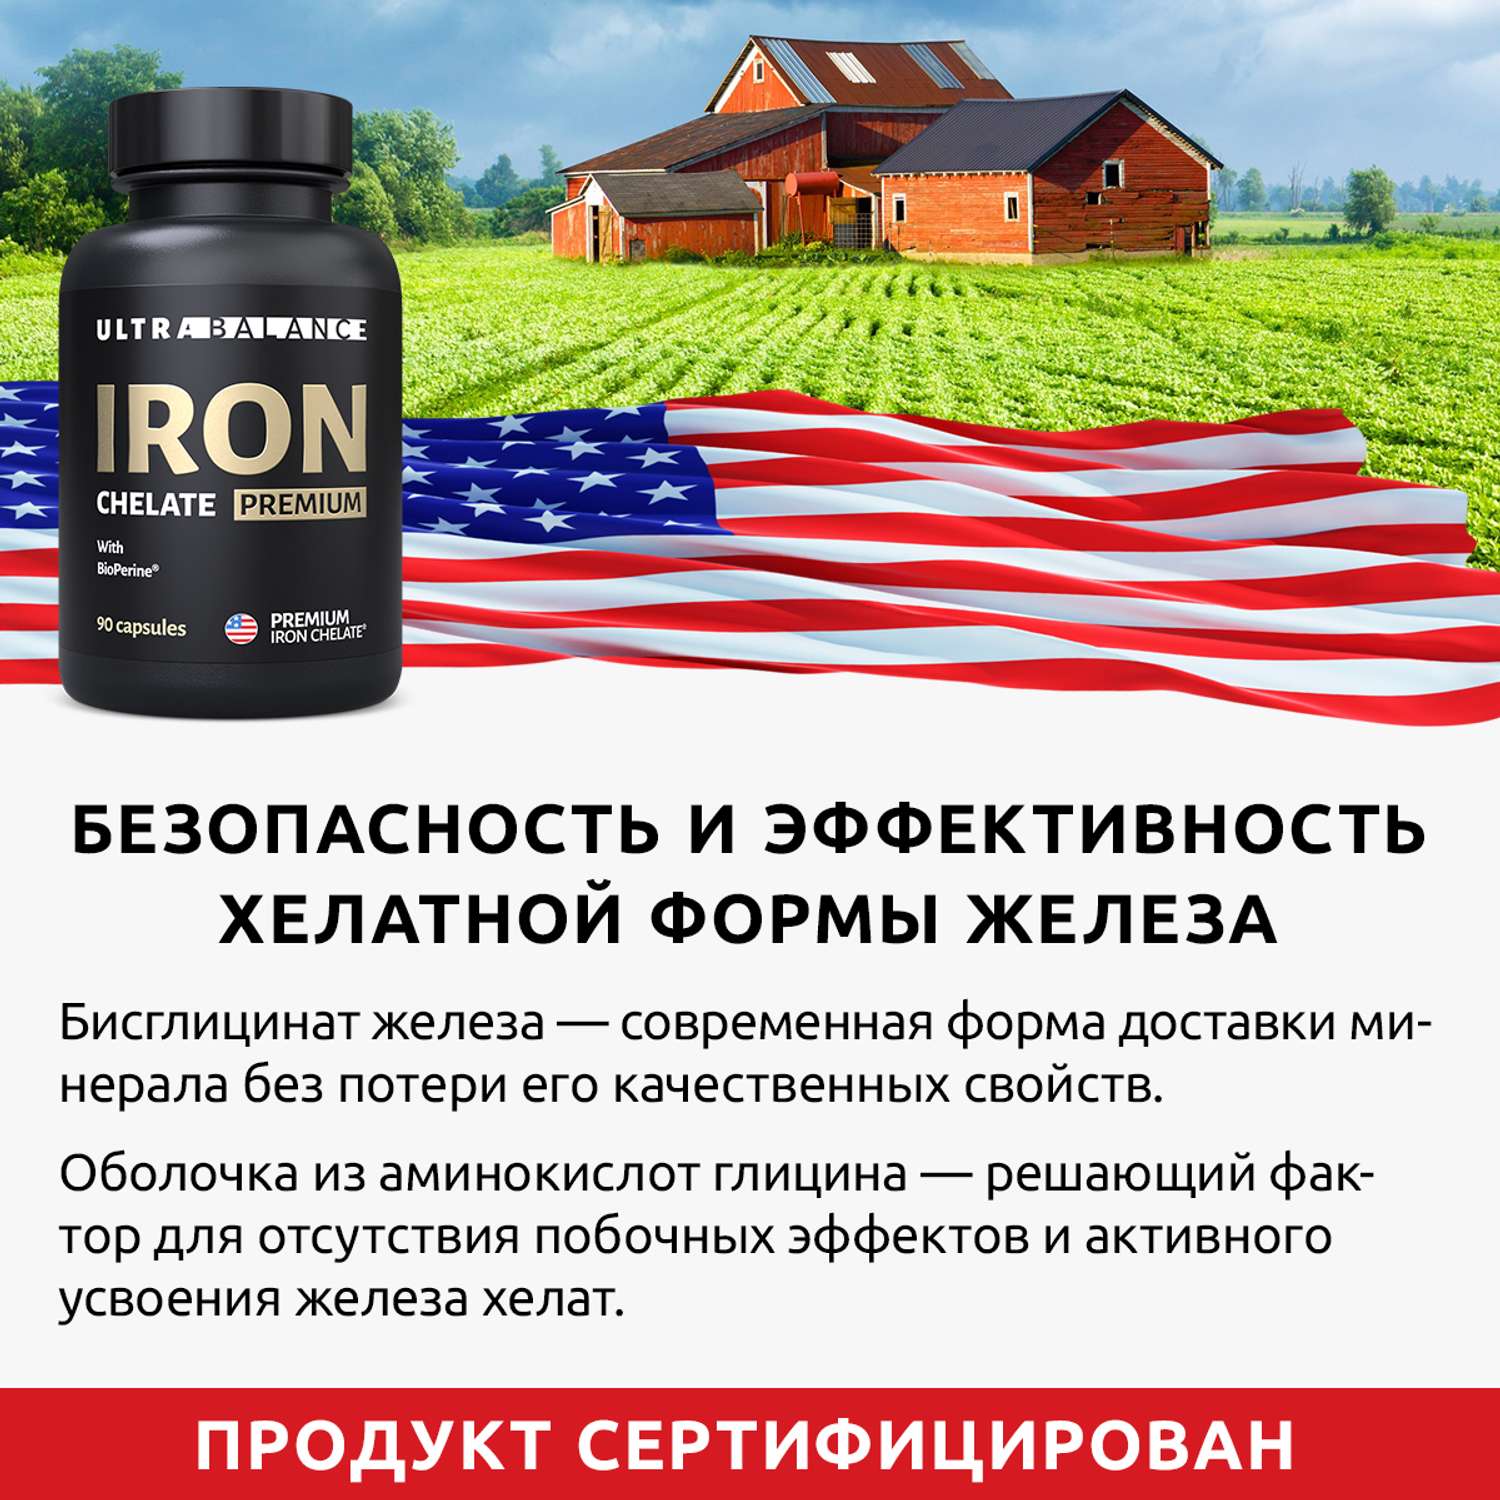 Железо хелатное премиум UltraBalance Iron Chelated Premium with BioPerine витамины хелат с пиперином 90 капсул - фото 4